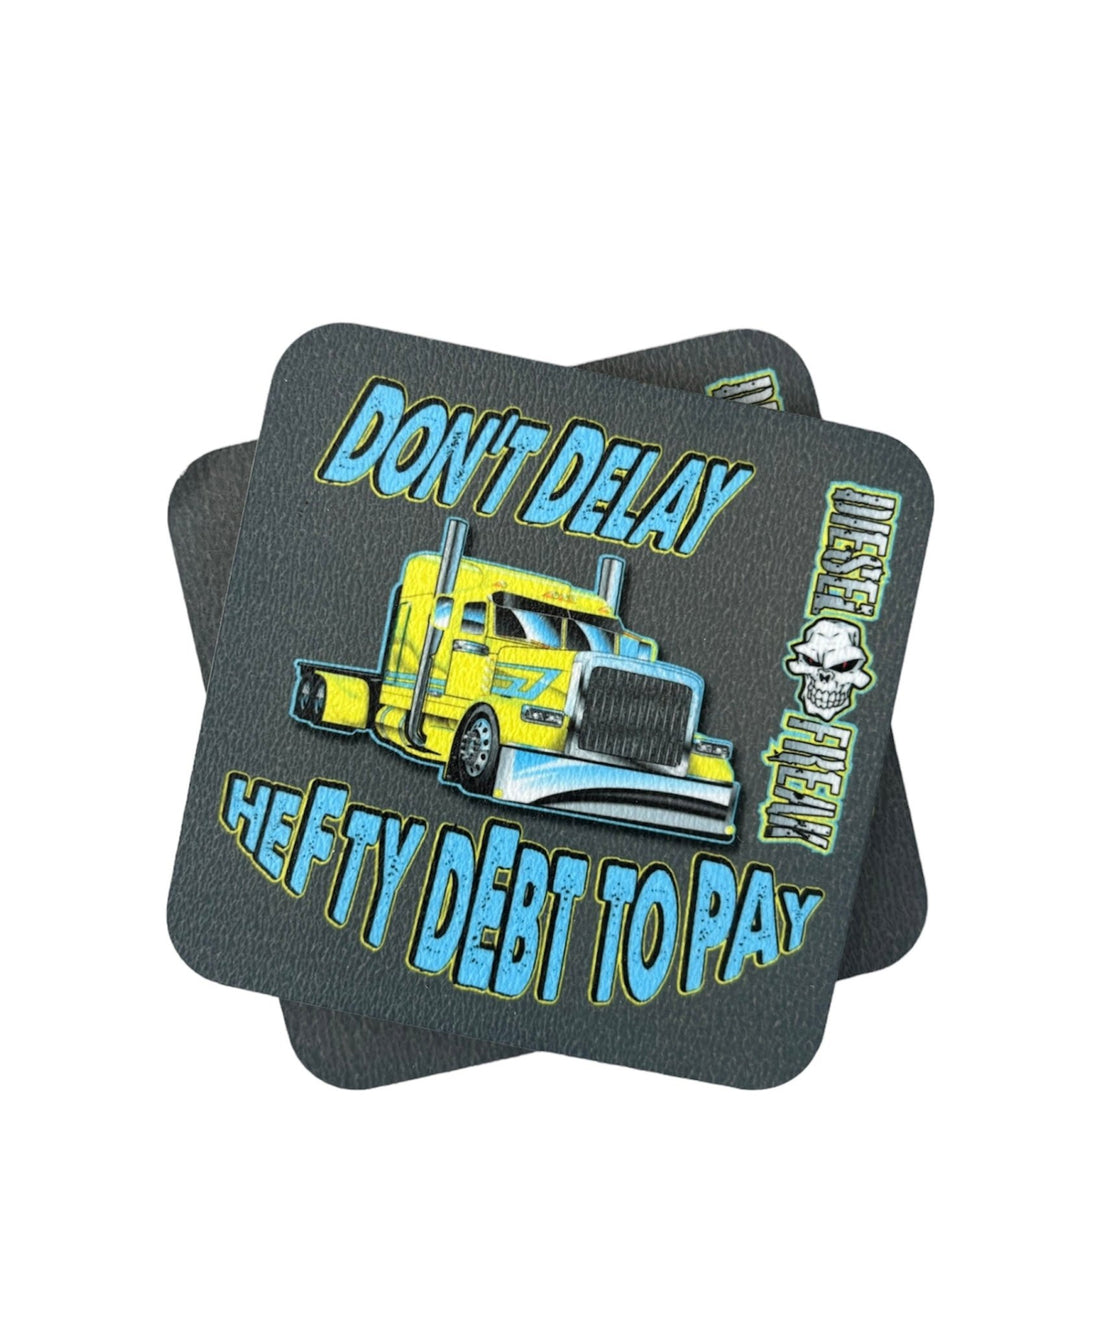 Don't Delay Textured Coasters - Diesel Freak